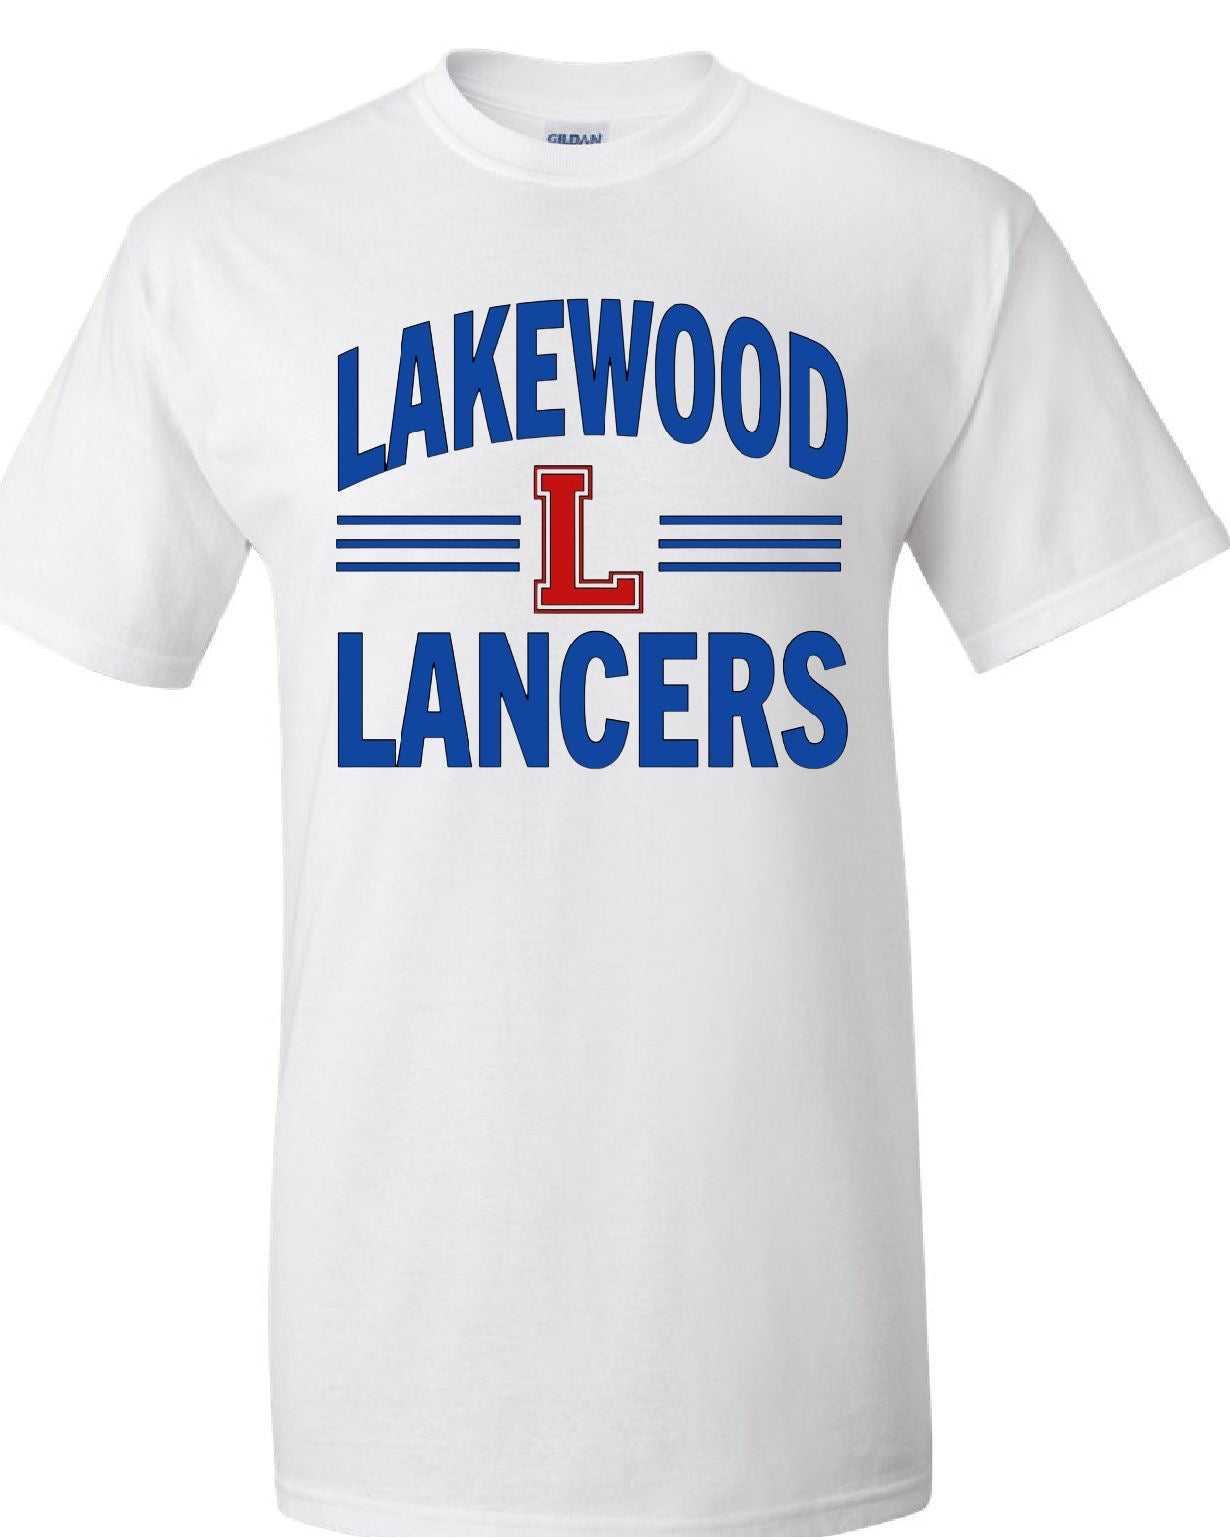 Lakewood Lancers Short-Sleeve Tee